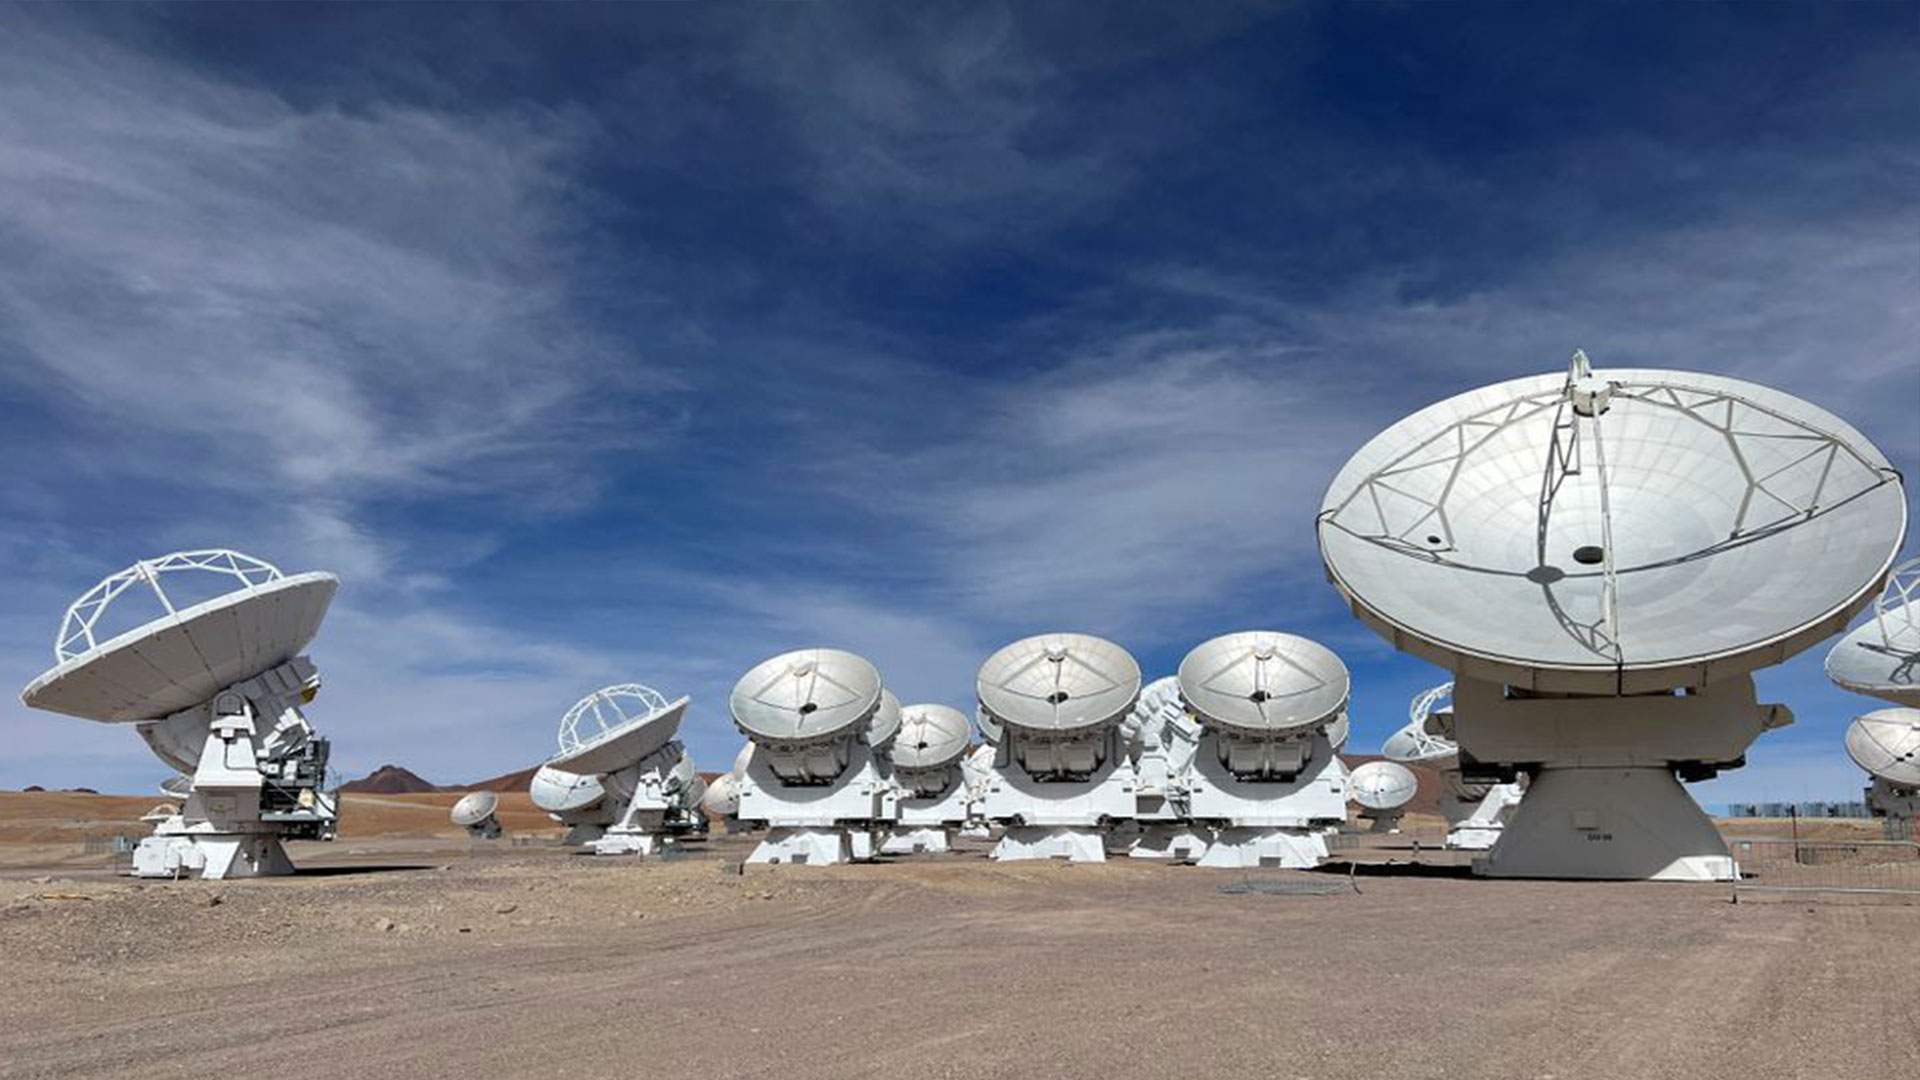  Parabolic antennas of the ALMA (Atacama Large Millimeter/submillimeter Array) observatory are seen at the El Llano de Chajnantor in the Atacama desert, Chile May 18, 2022. Picture taken May 18, 2022. REUTERS/Rodrigo Gutierrez